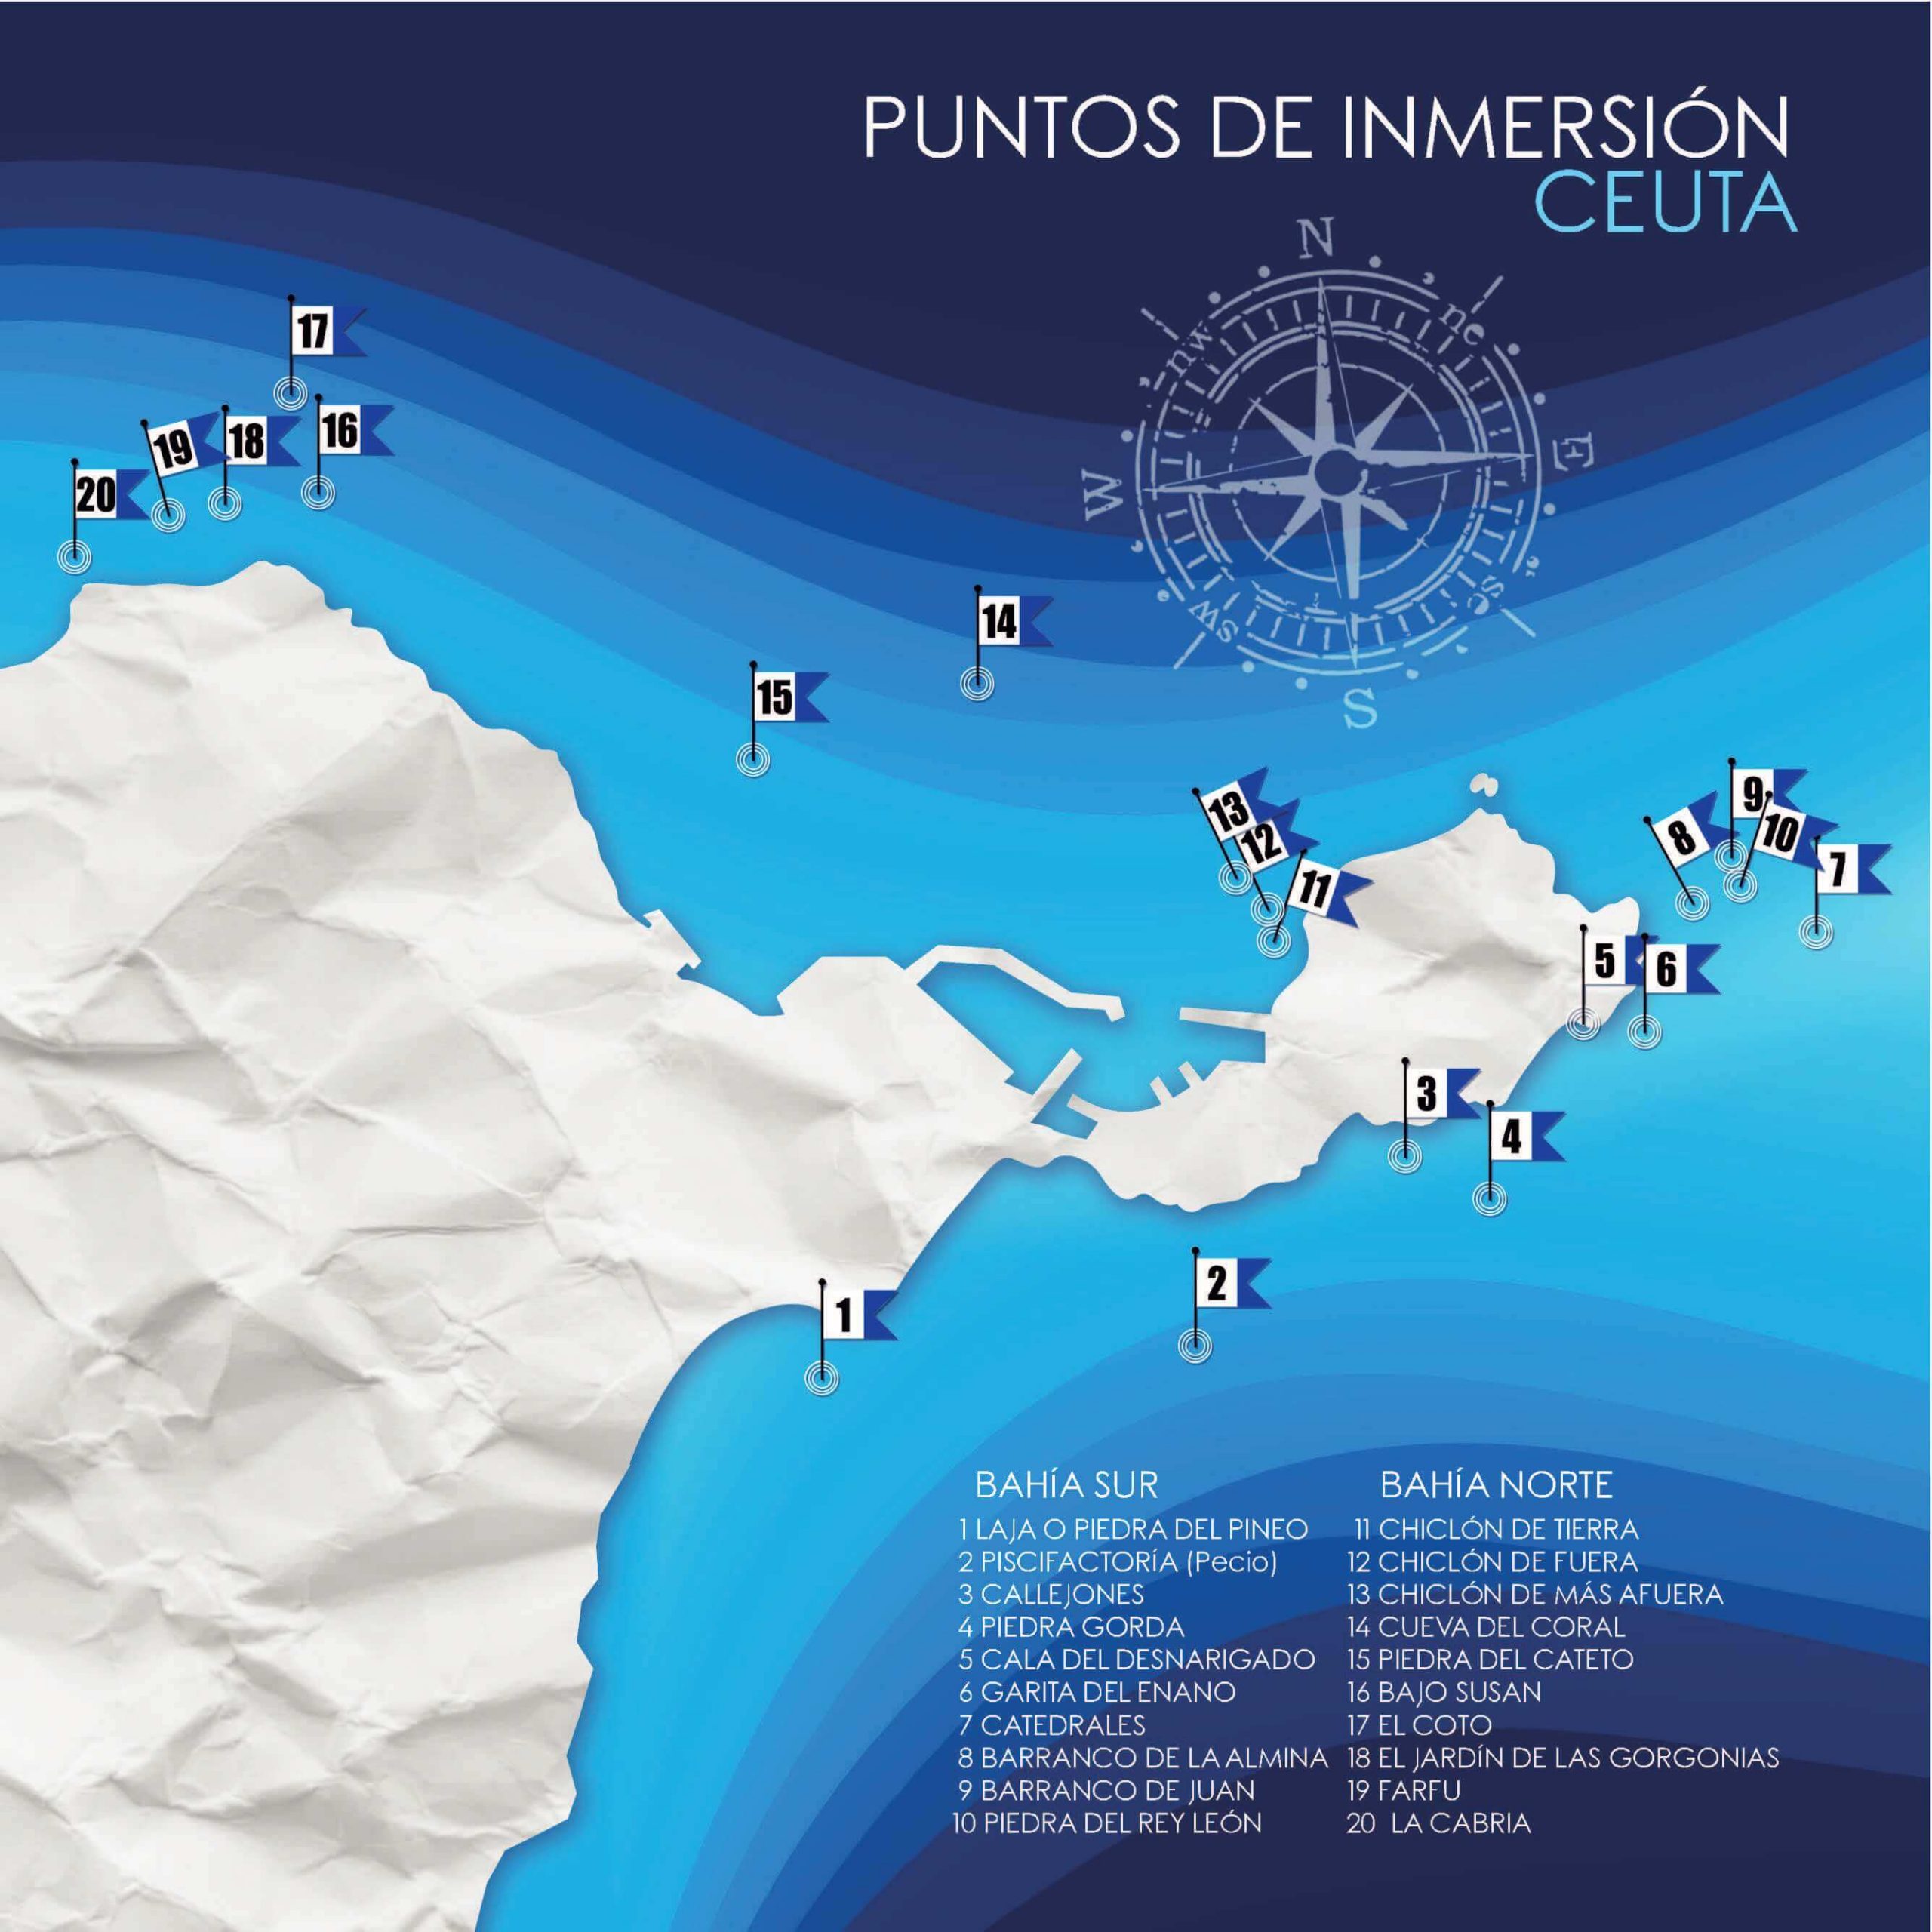 Puntos de inmersión de Ceuta